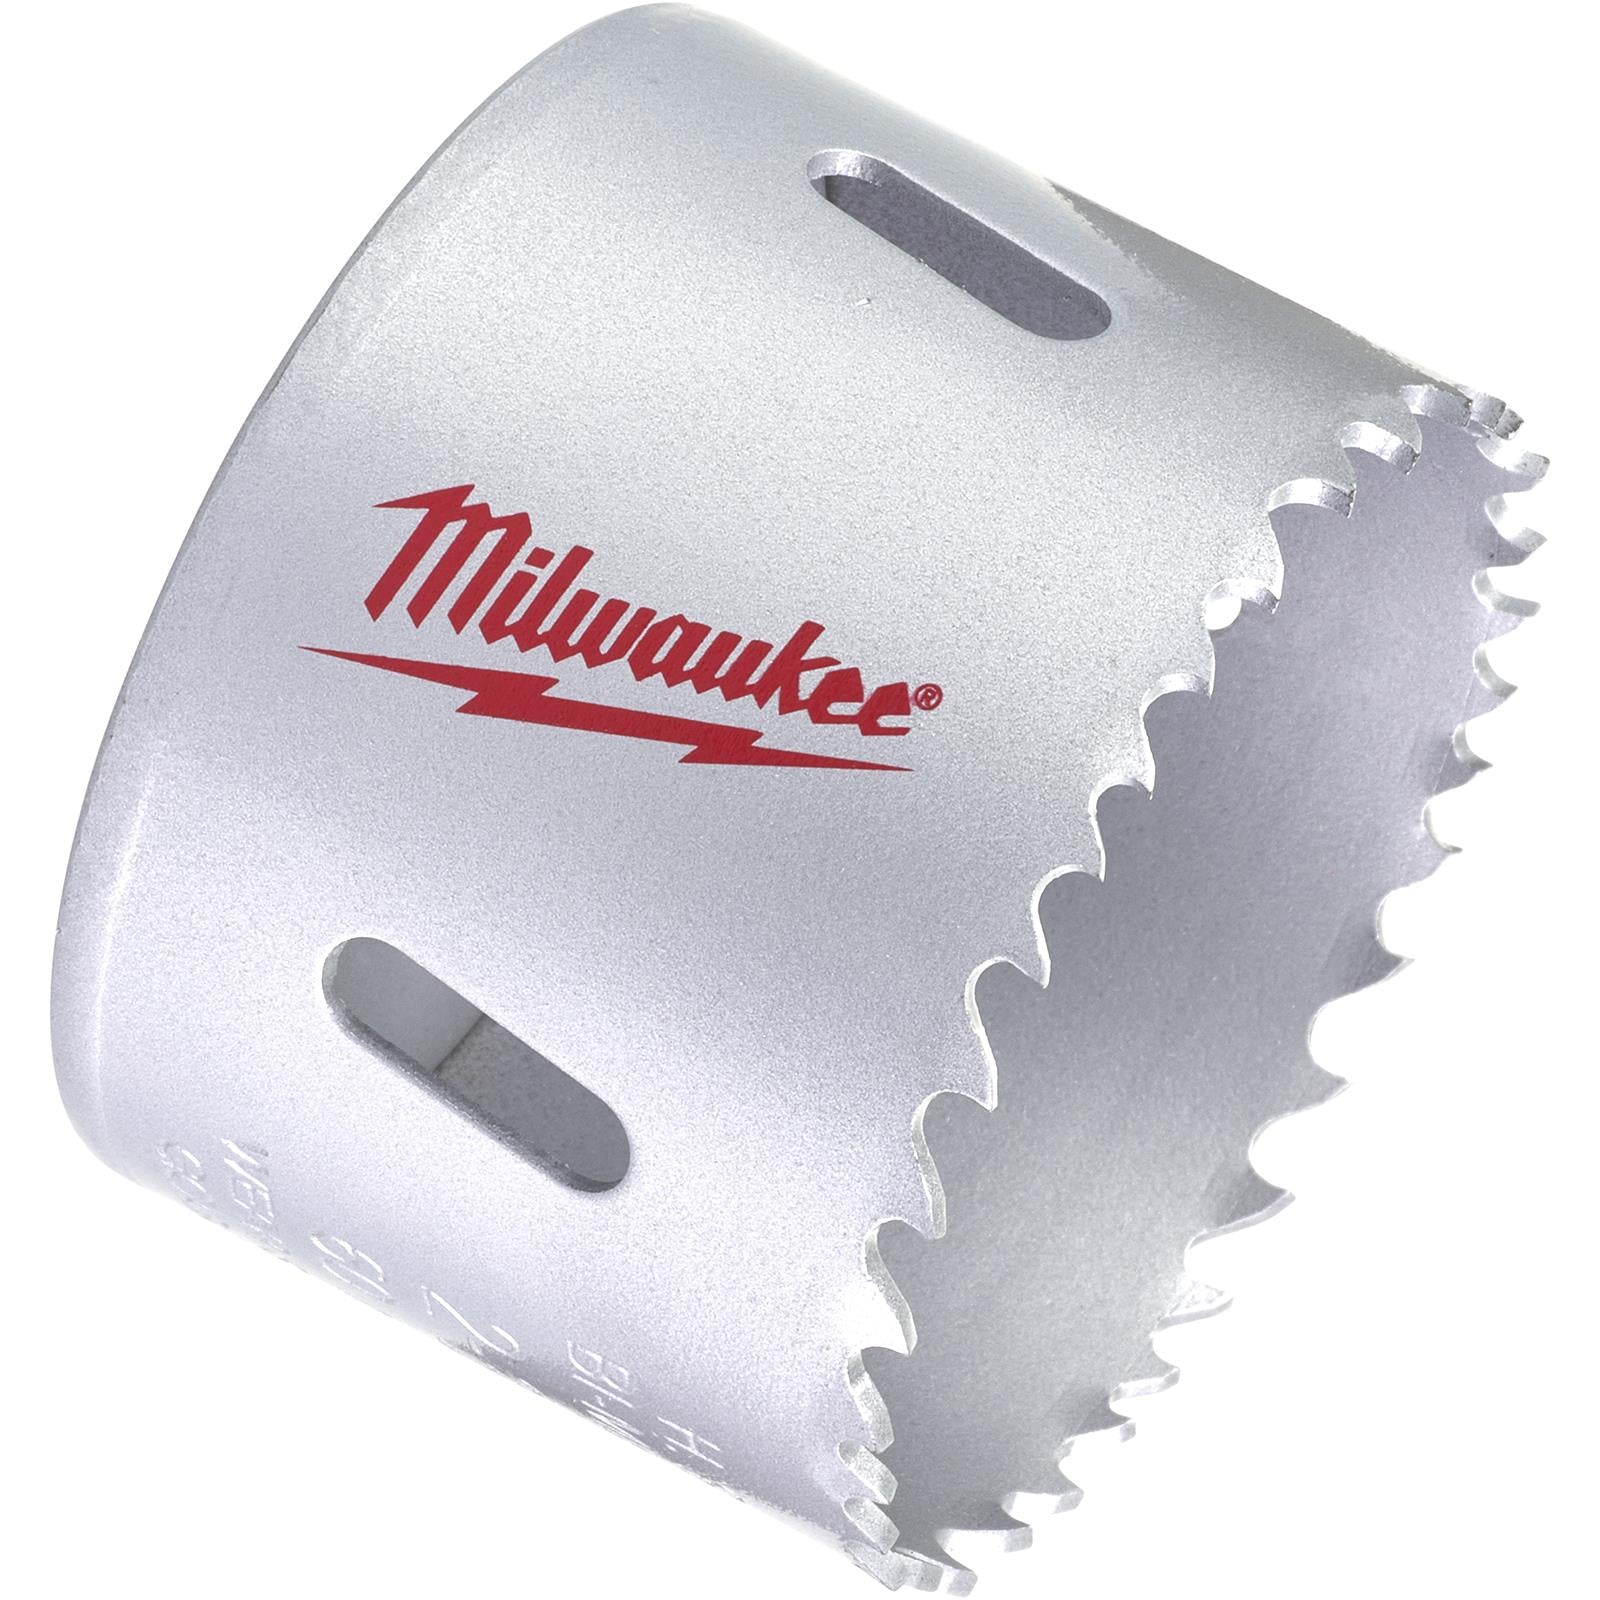 Milwaukee Contractors Holesaw Bi Metal Teeth 14-152mm Cutting Depth 38mm